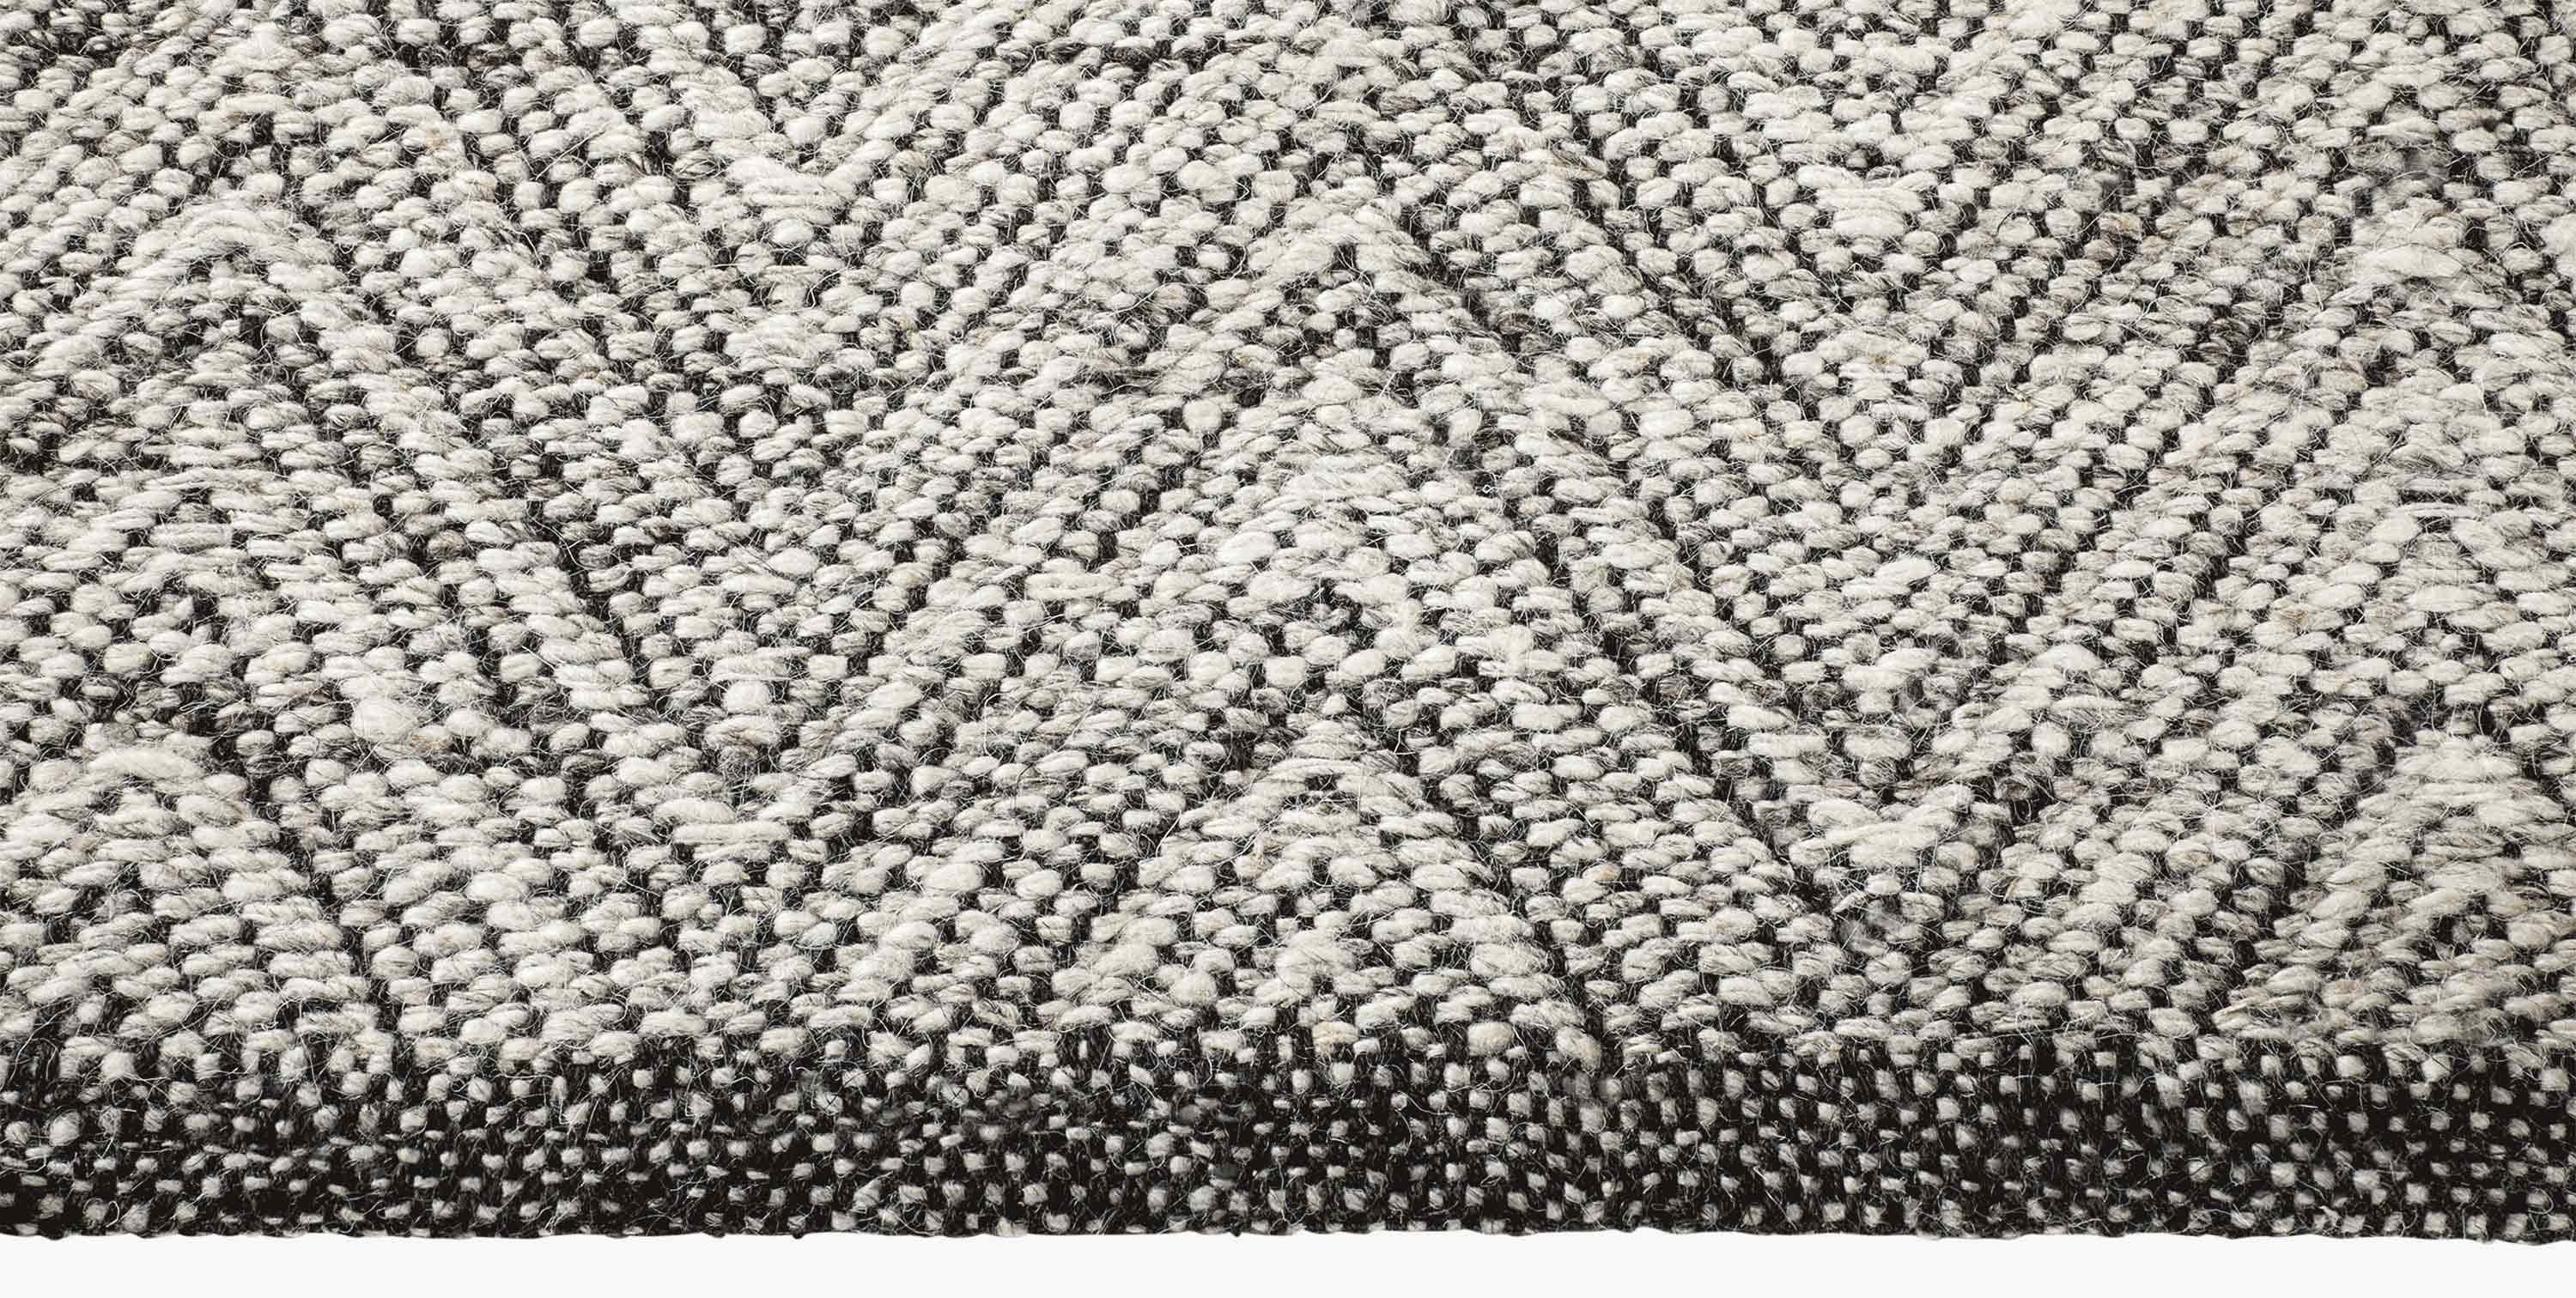 For Sale: Silver Ben Soleimani Ceyah Rug– Hand-woven Plush Textured Wool + Linen Charcoal 12'x15' 3